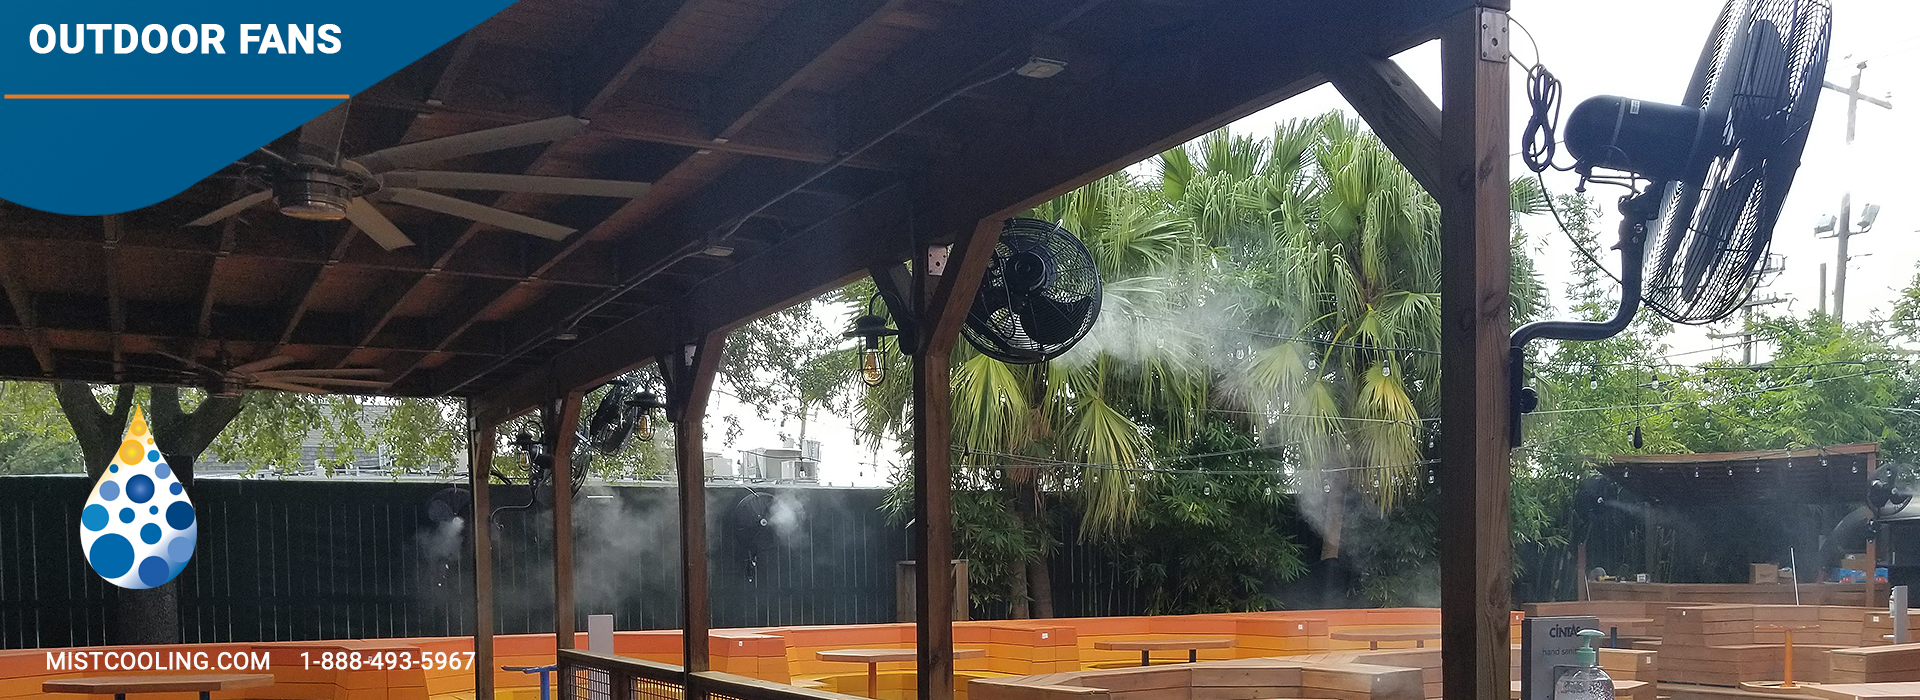 Outdoor Mist fans-High velocity